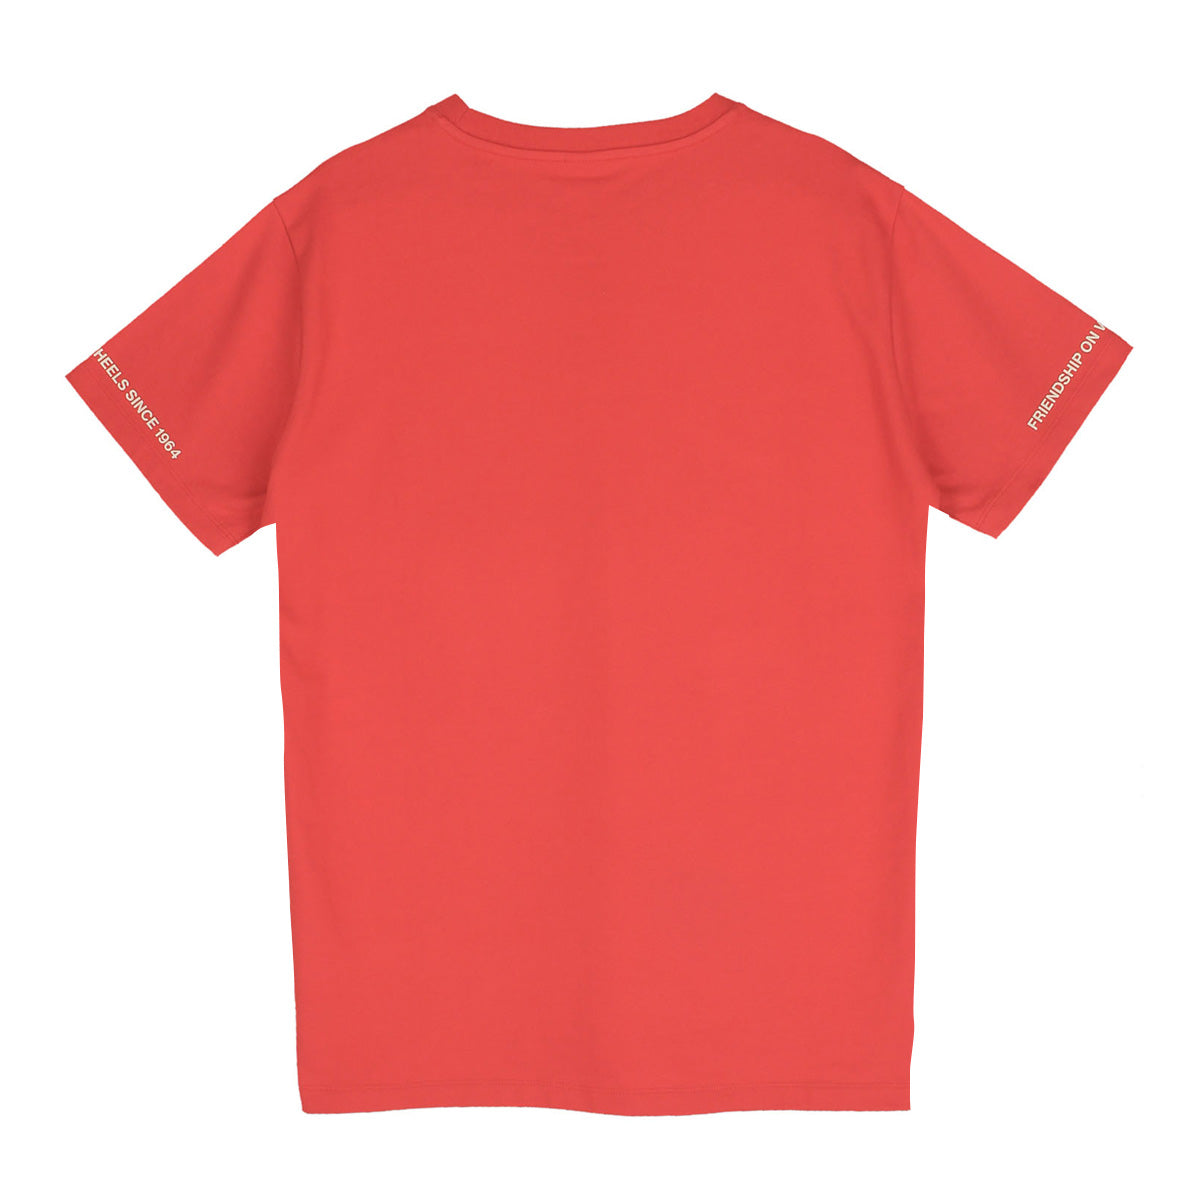 Camiseta bolsillo inclinado (Off-White/Rojo)